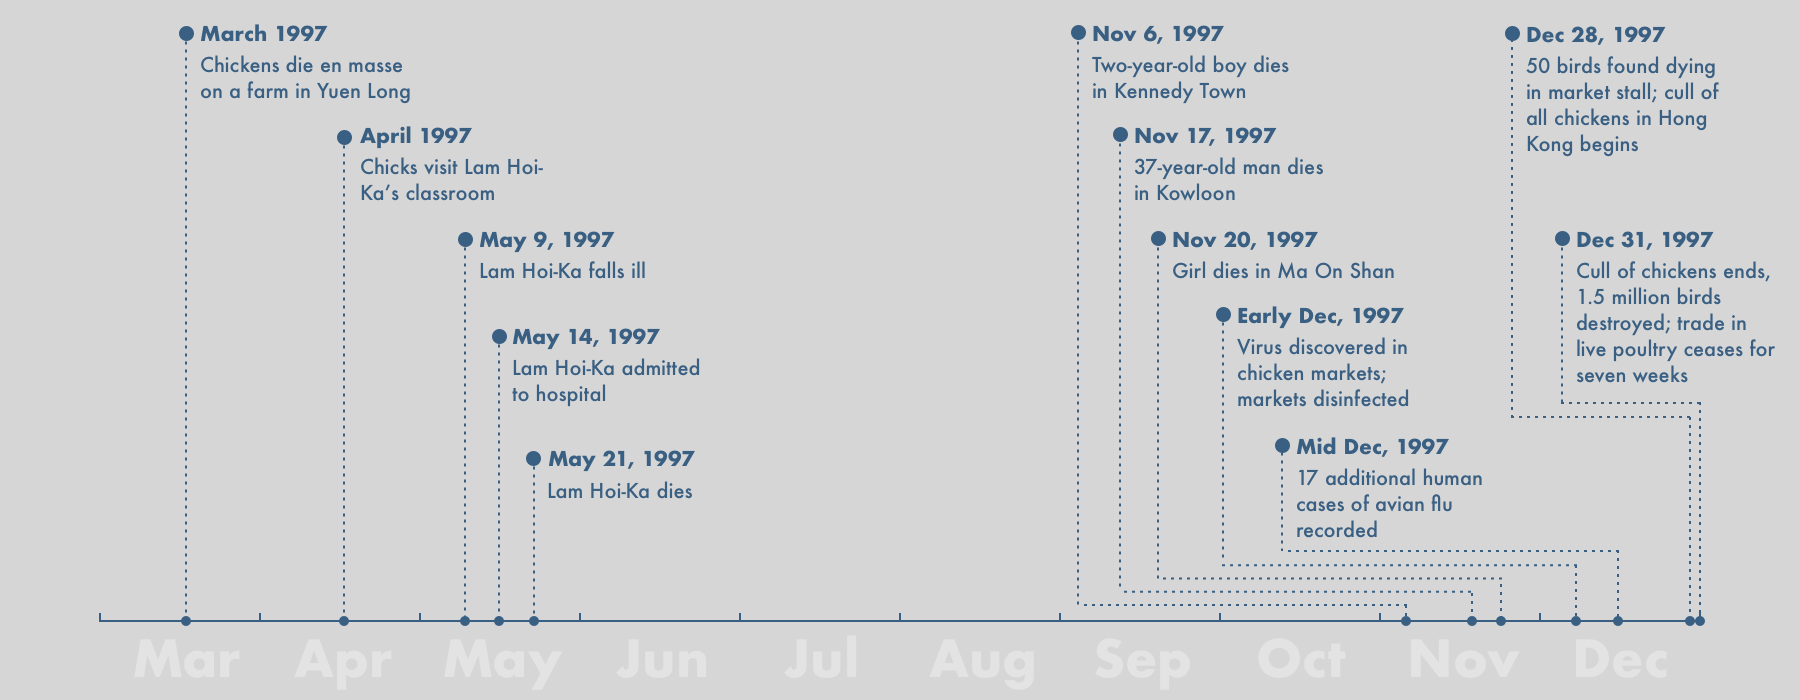 Timeline of events in 1997 Hong Kong avian flu outbreak